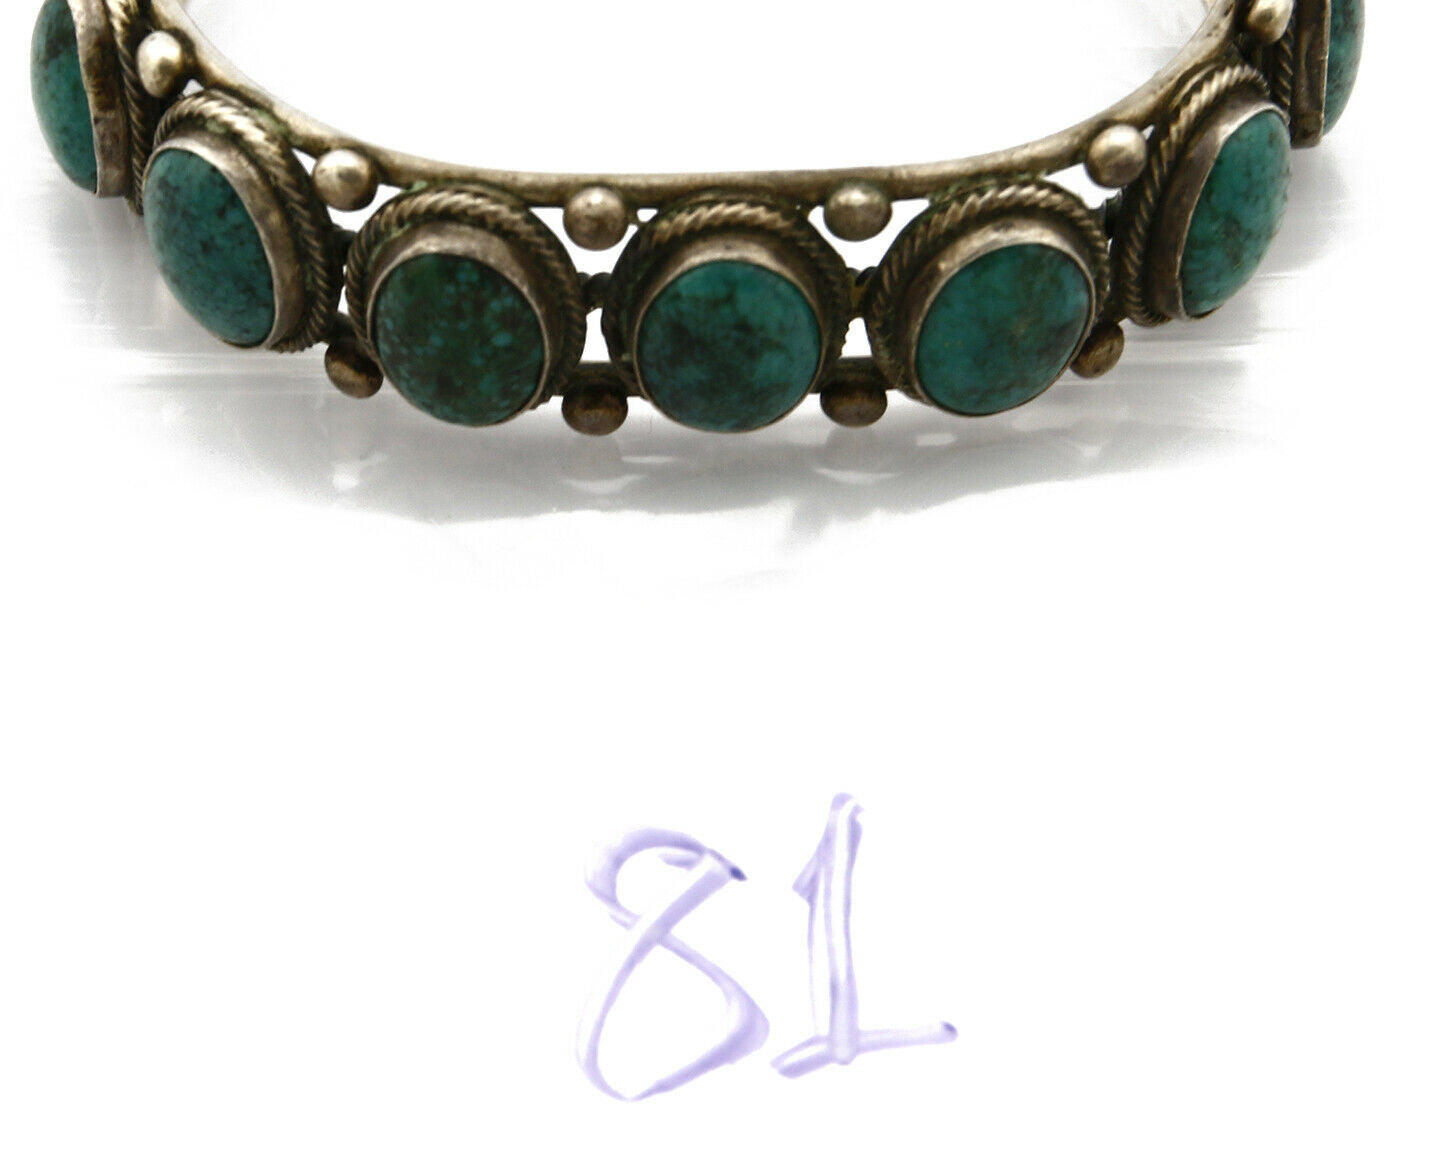 Women's Navajo Turquoise Bracelet .925 Silver Handmade Signed Boyd C.80's